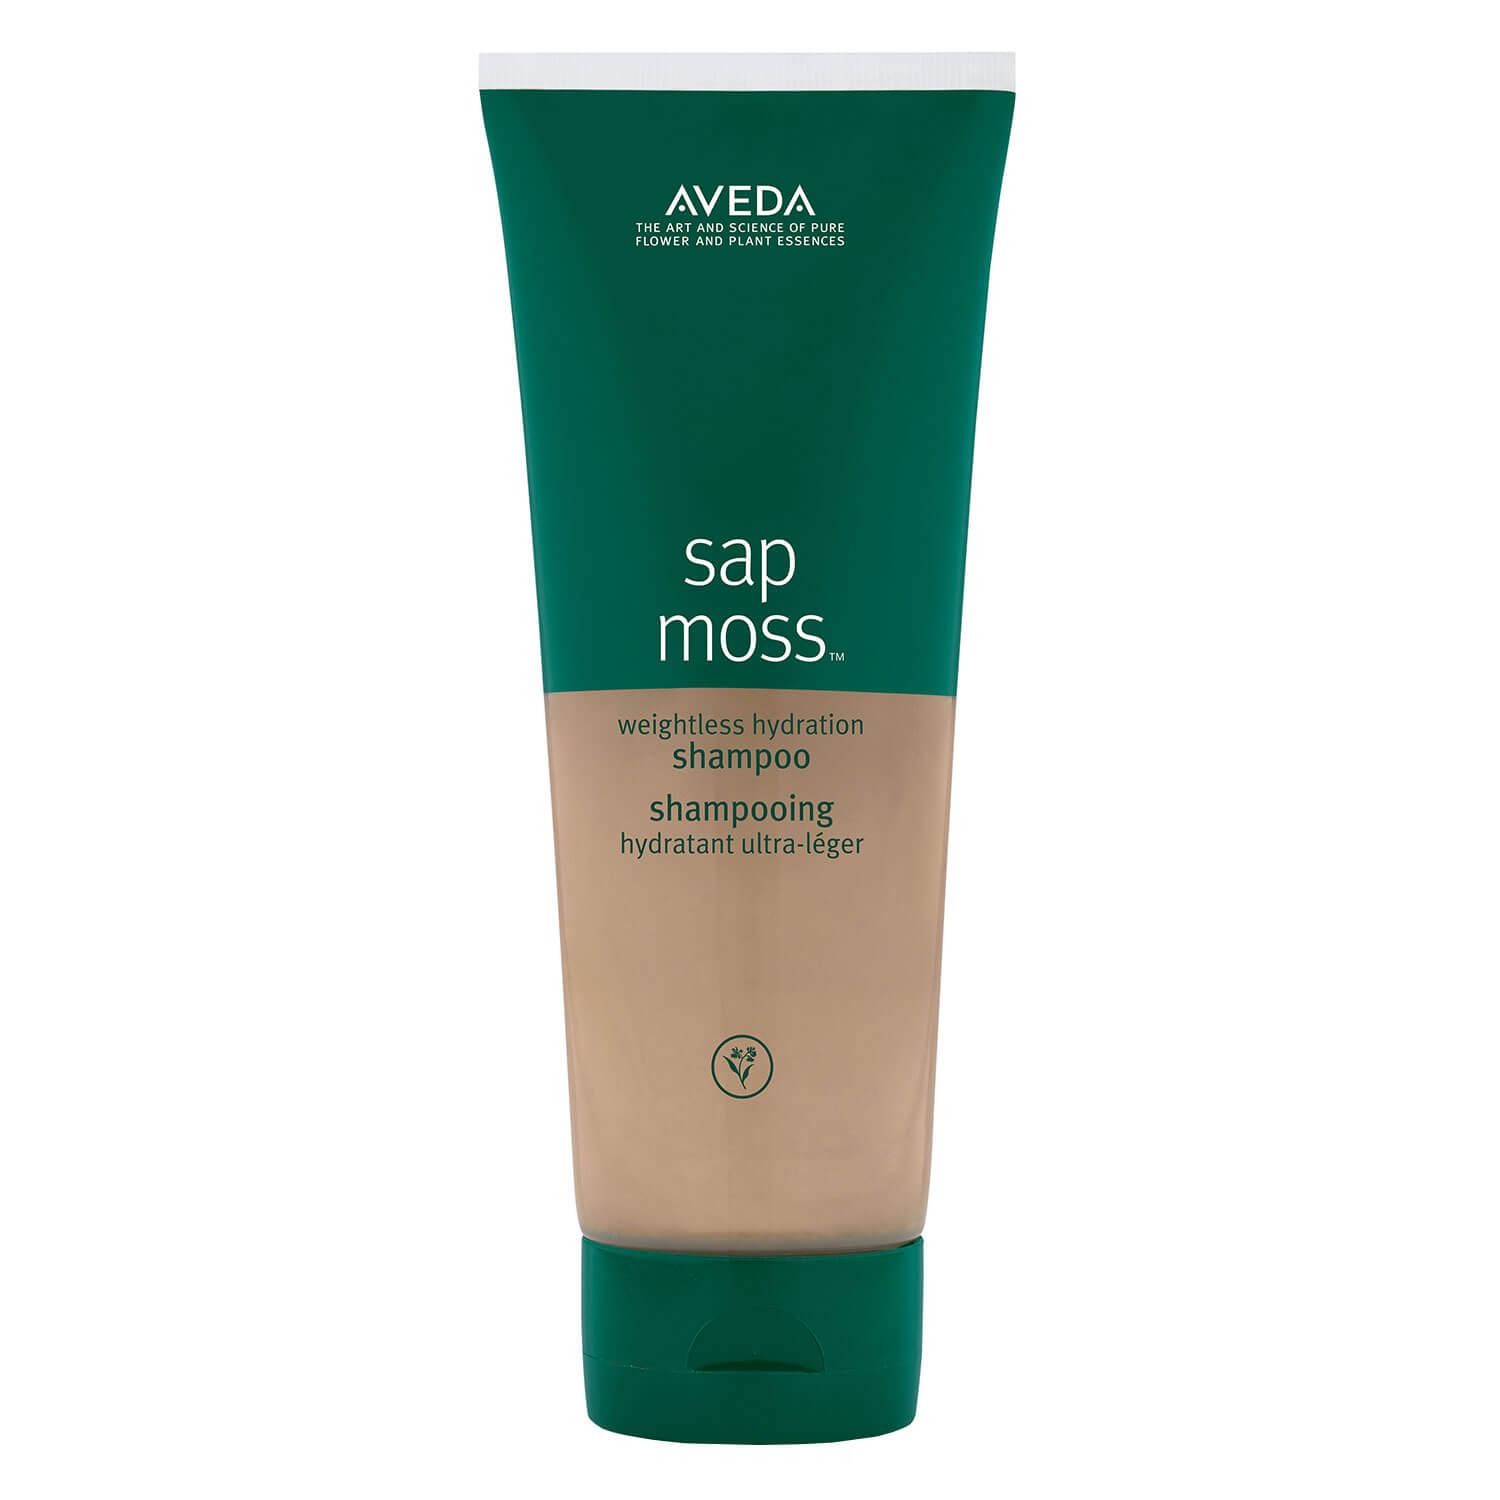 sap moss - weightless hydration shampoo